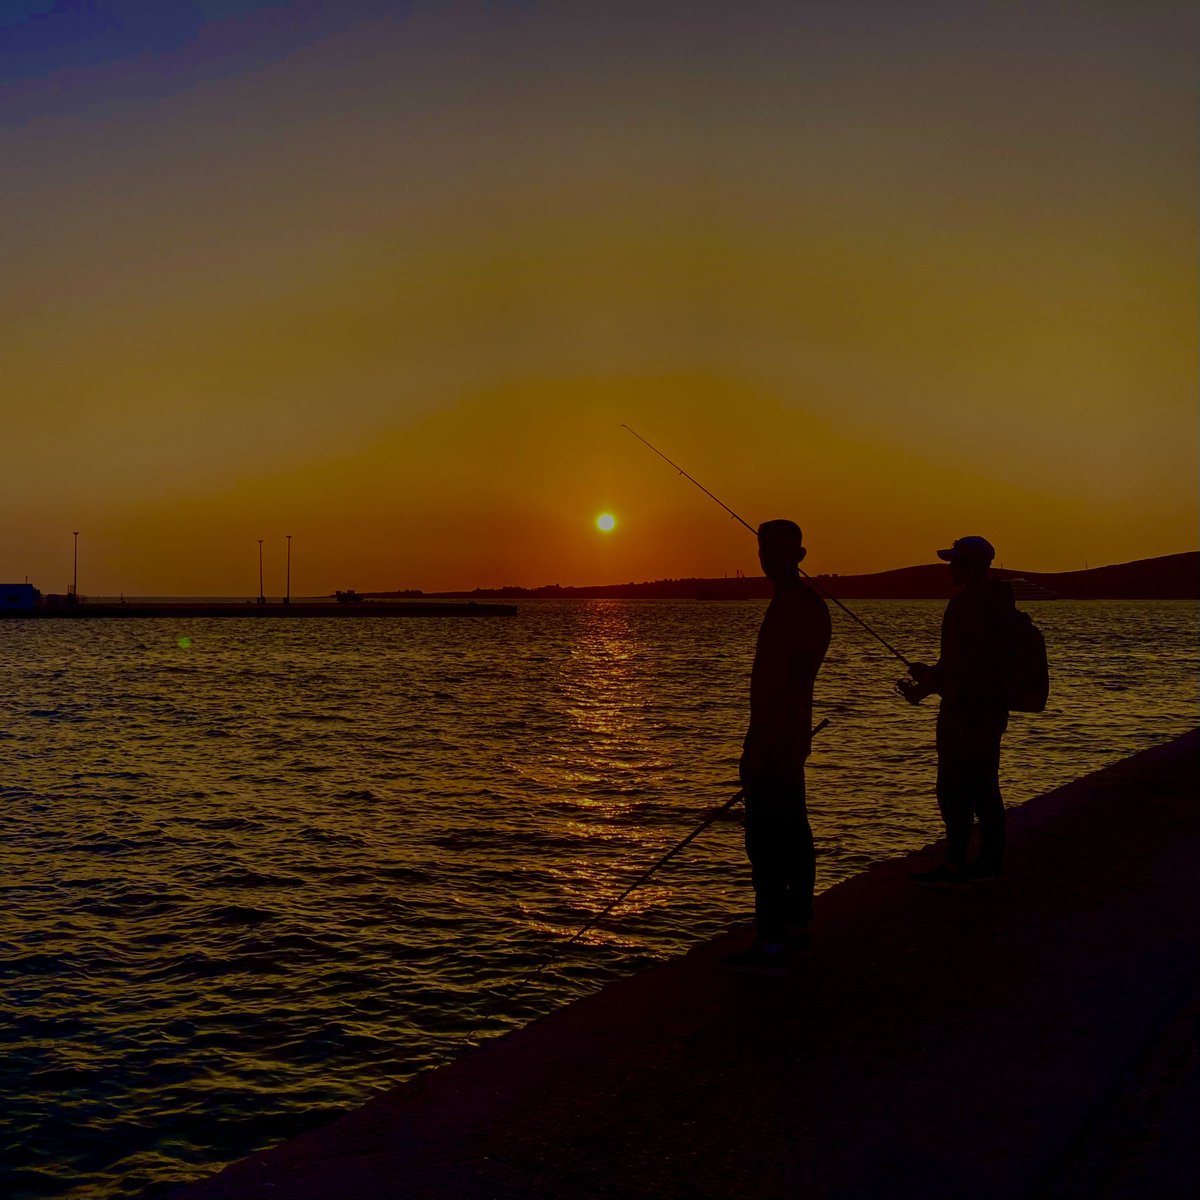 ‘Catching’ the Sun in Greece #Paros #greekislands